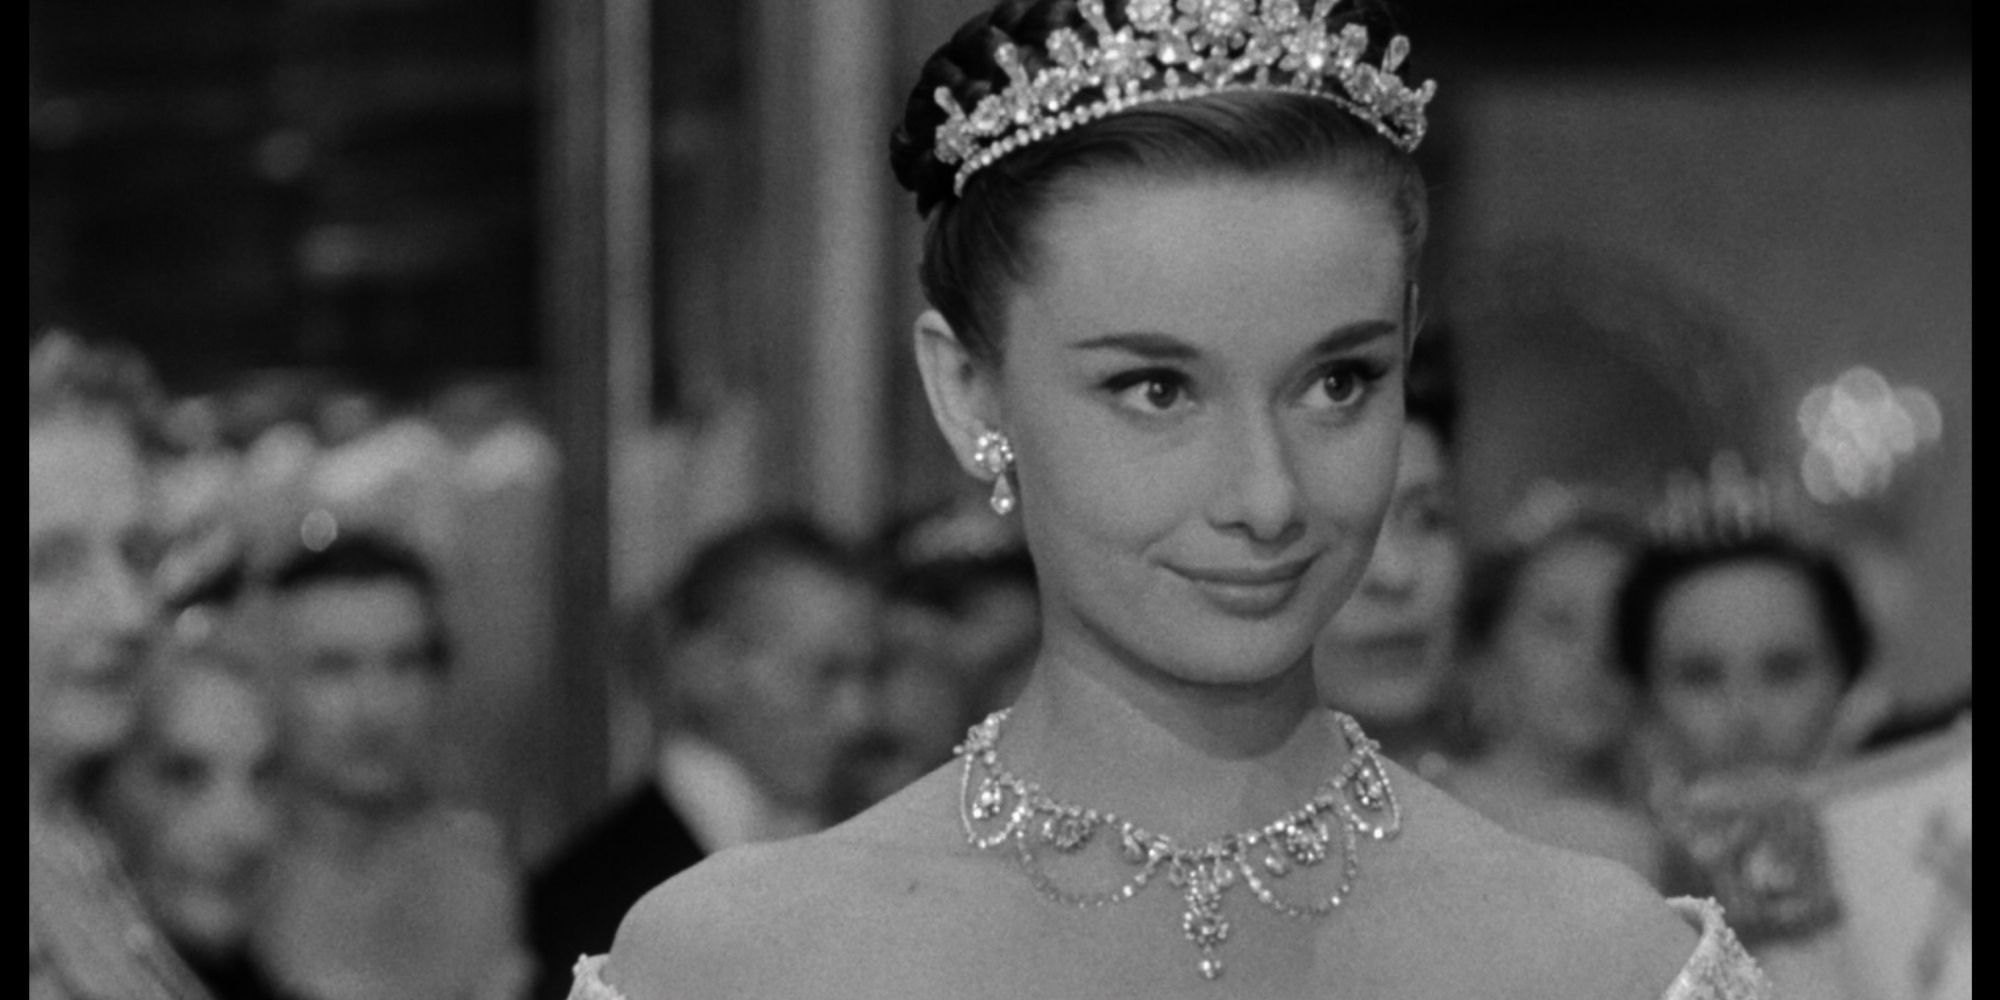 Audrey Hepburn as Princess Ann in Roman Holiday